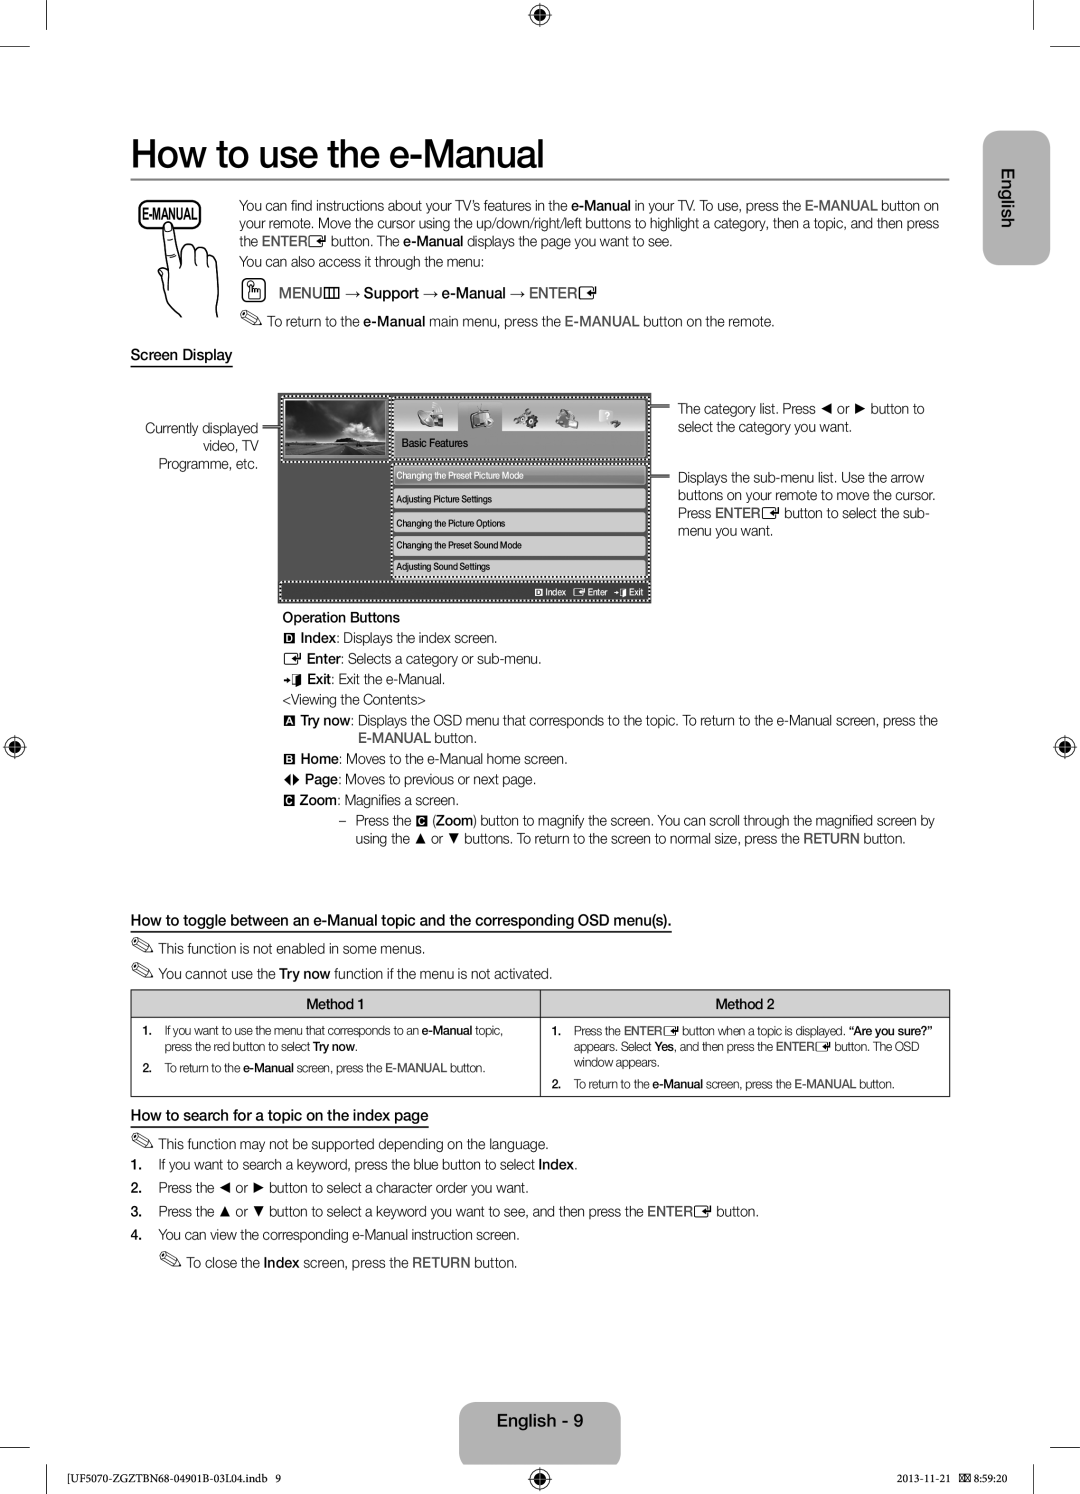 Samsung UE46F5000AWXXN How to use the e-Manual, E-Manual, OO MENUm→ Support → e-Manual → ENTERE, Screen Display, English 